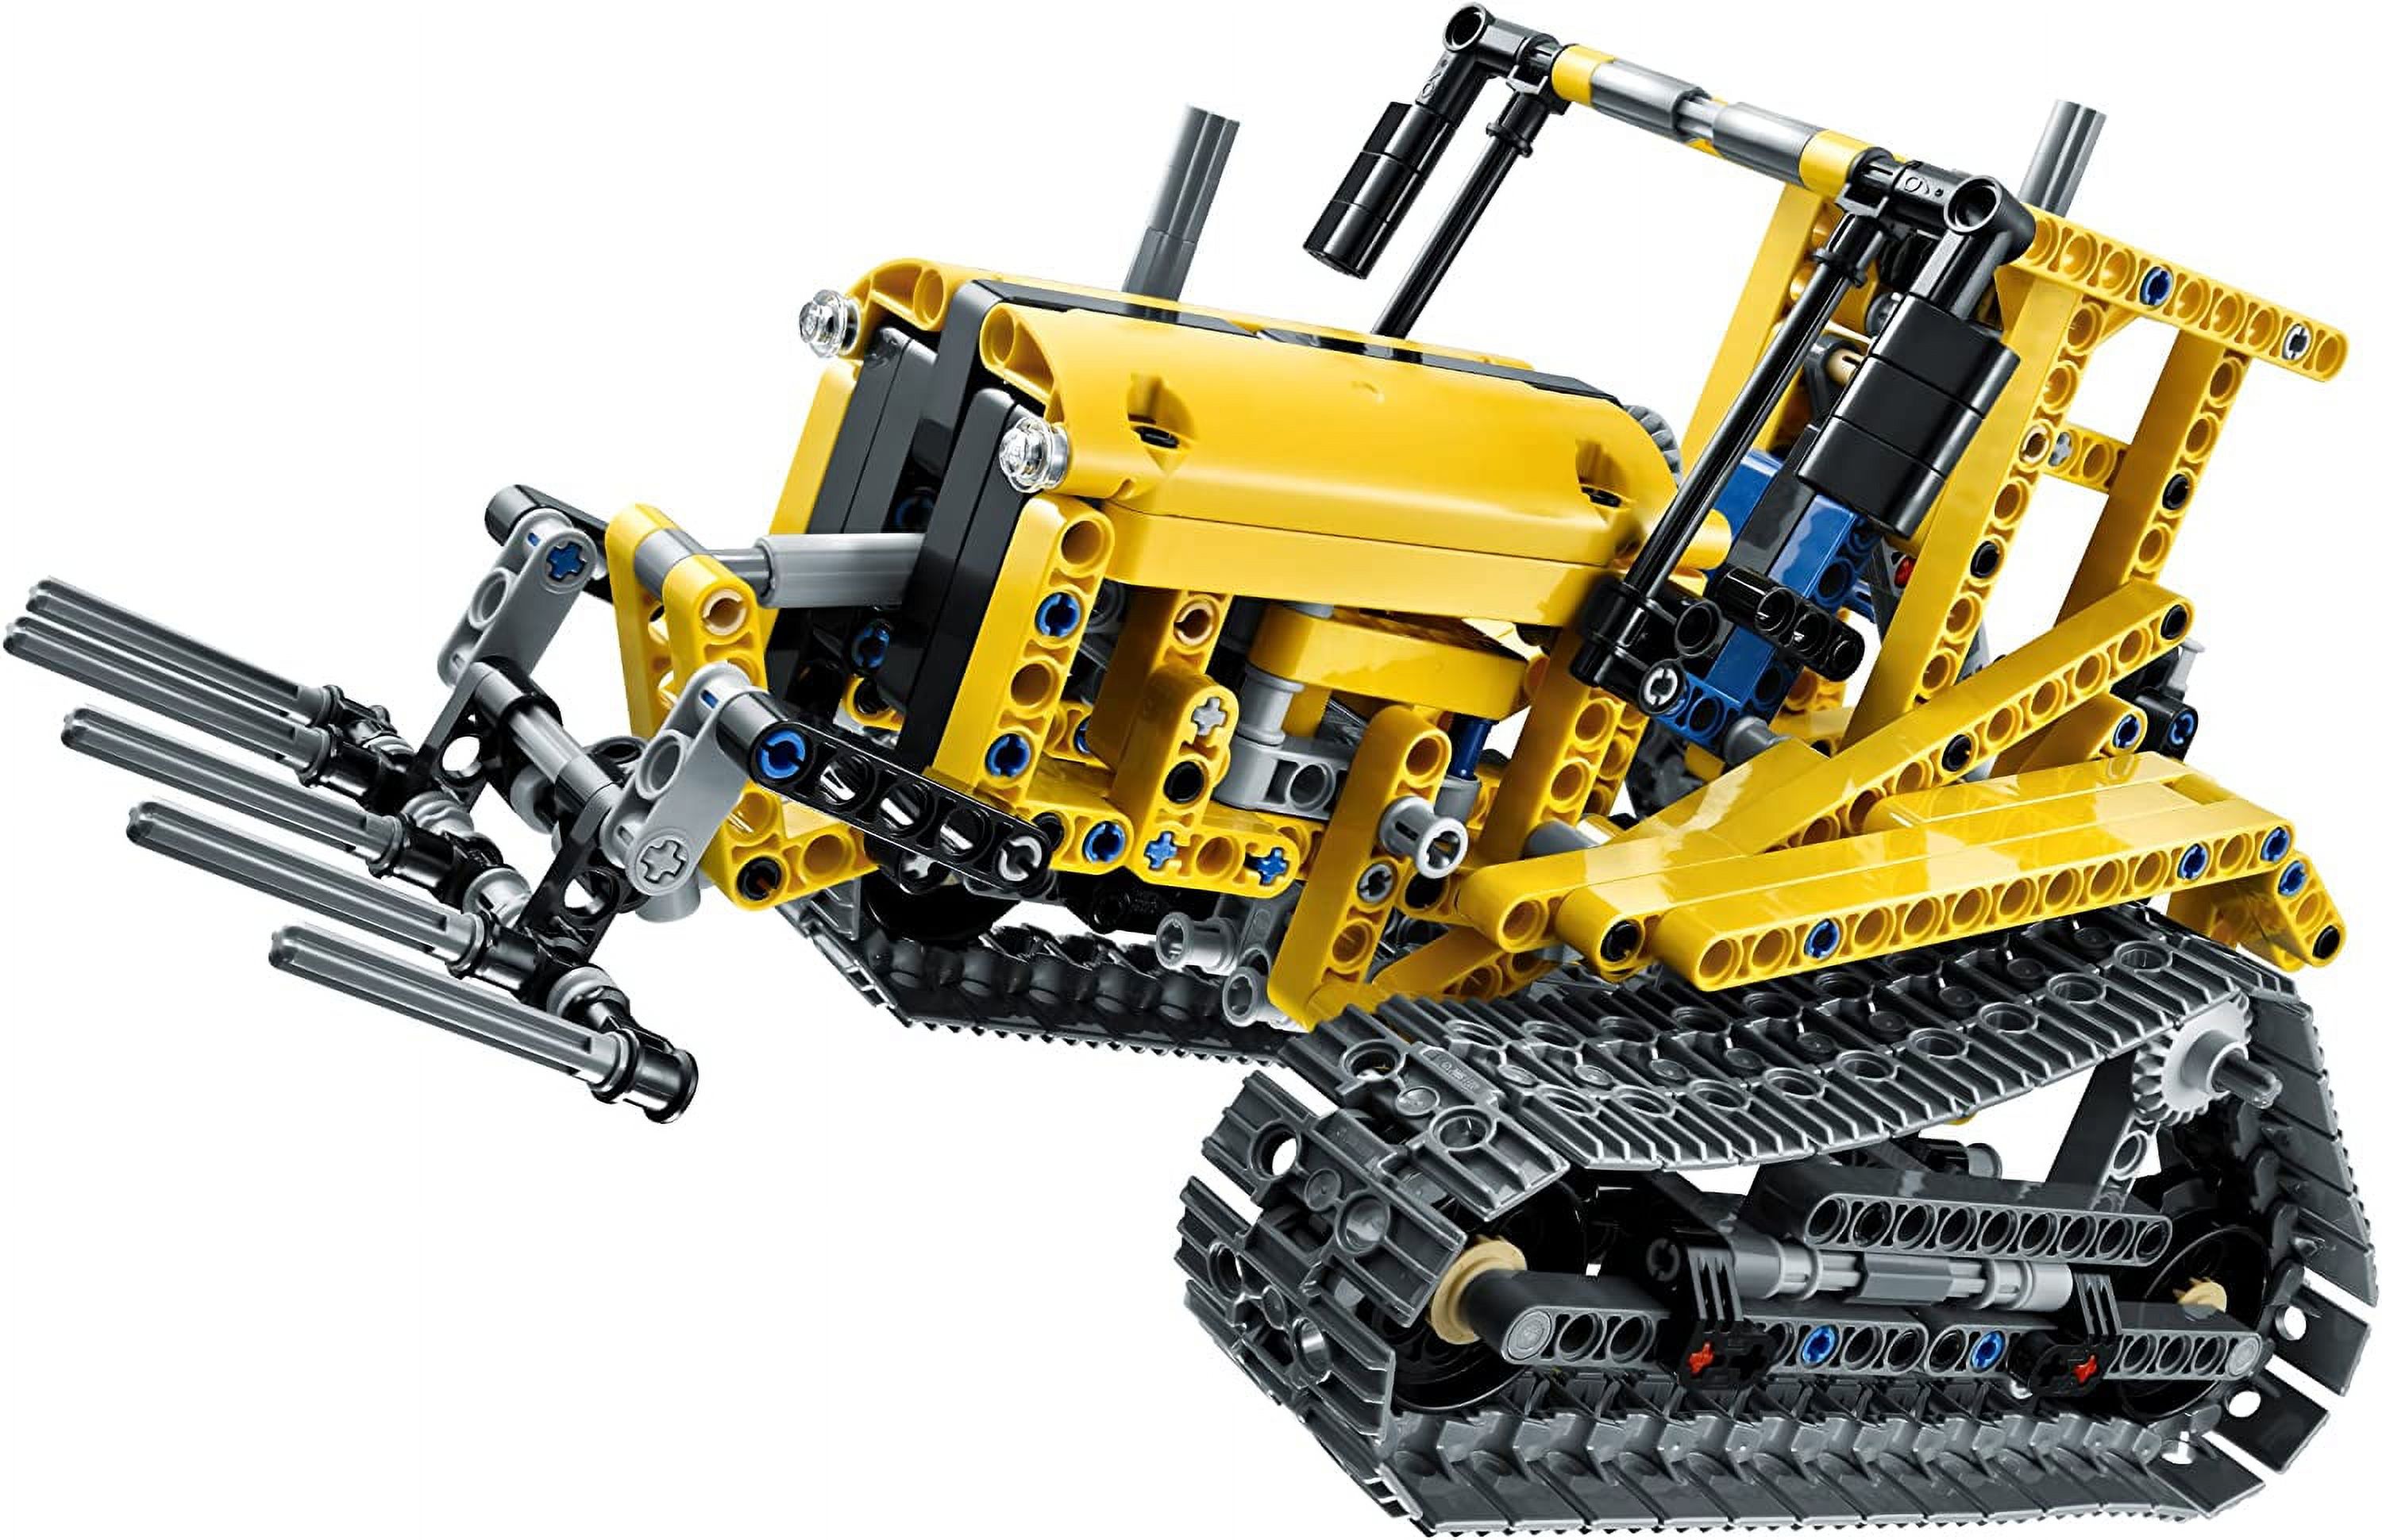 LEGO Technic 42006 Excavator - image 2 of 5